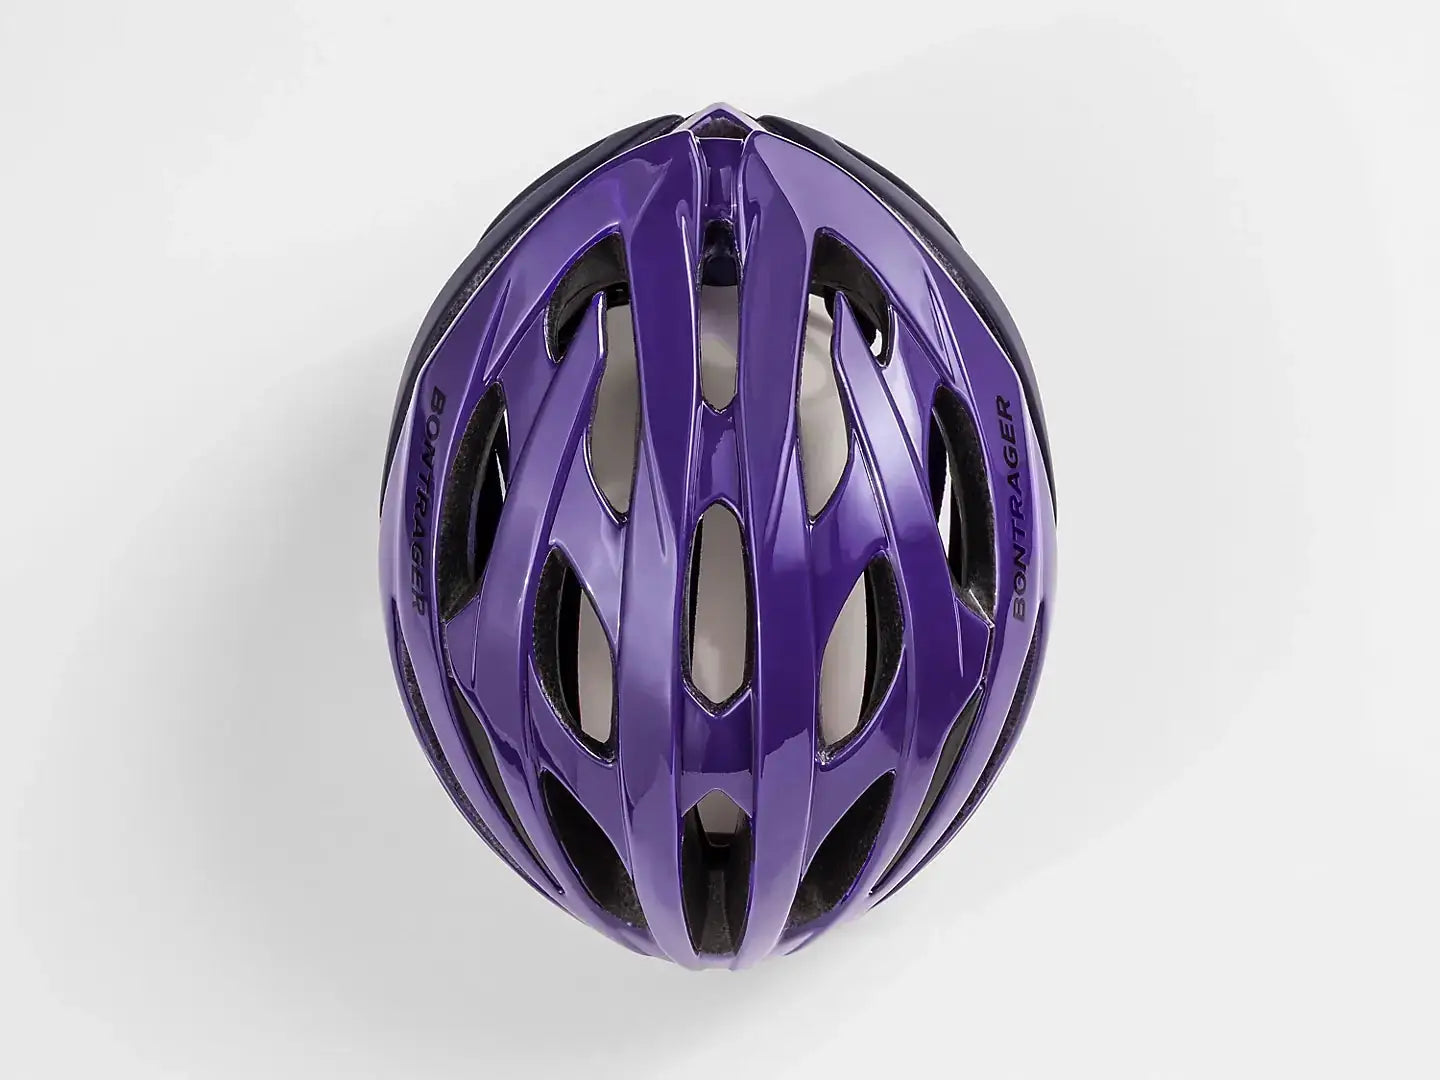 Helmet Bontrager Starvos Wheels Bikes